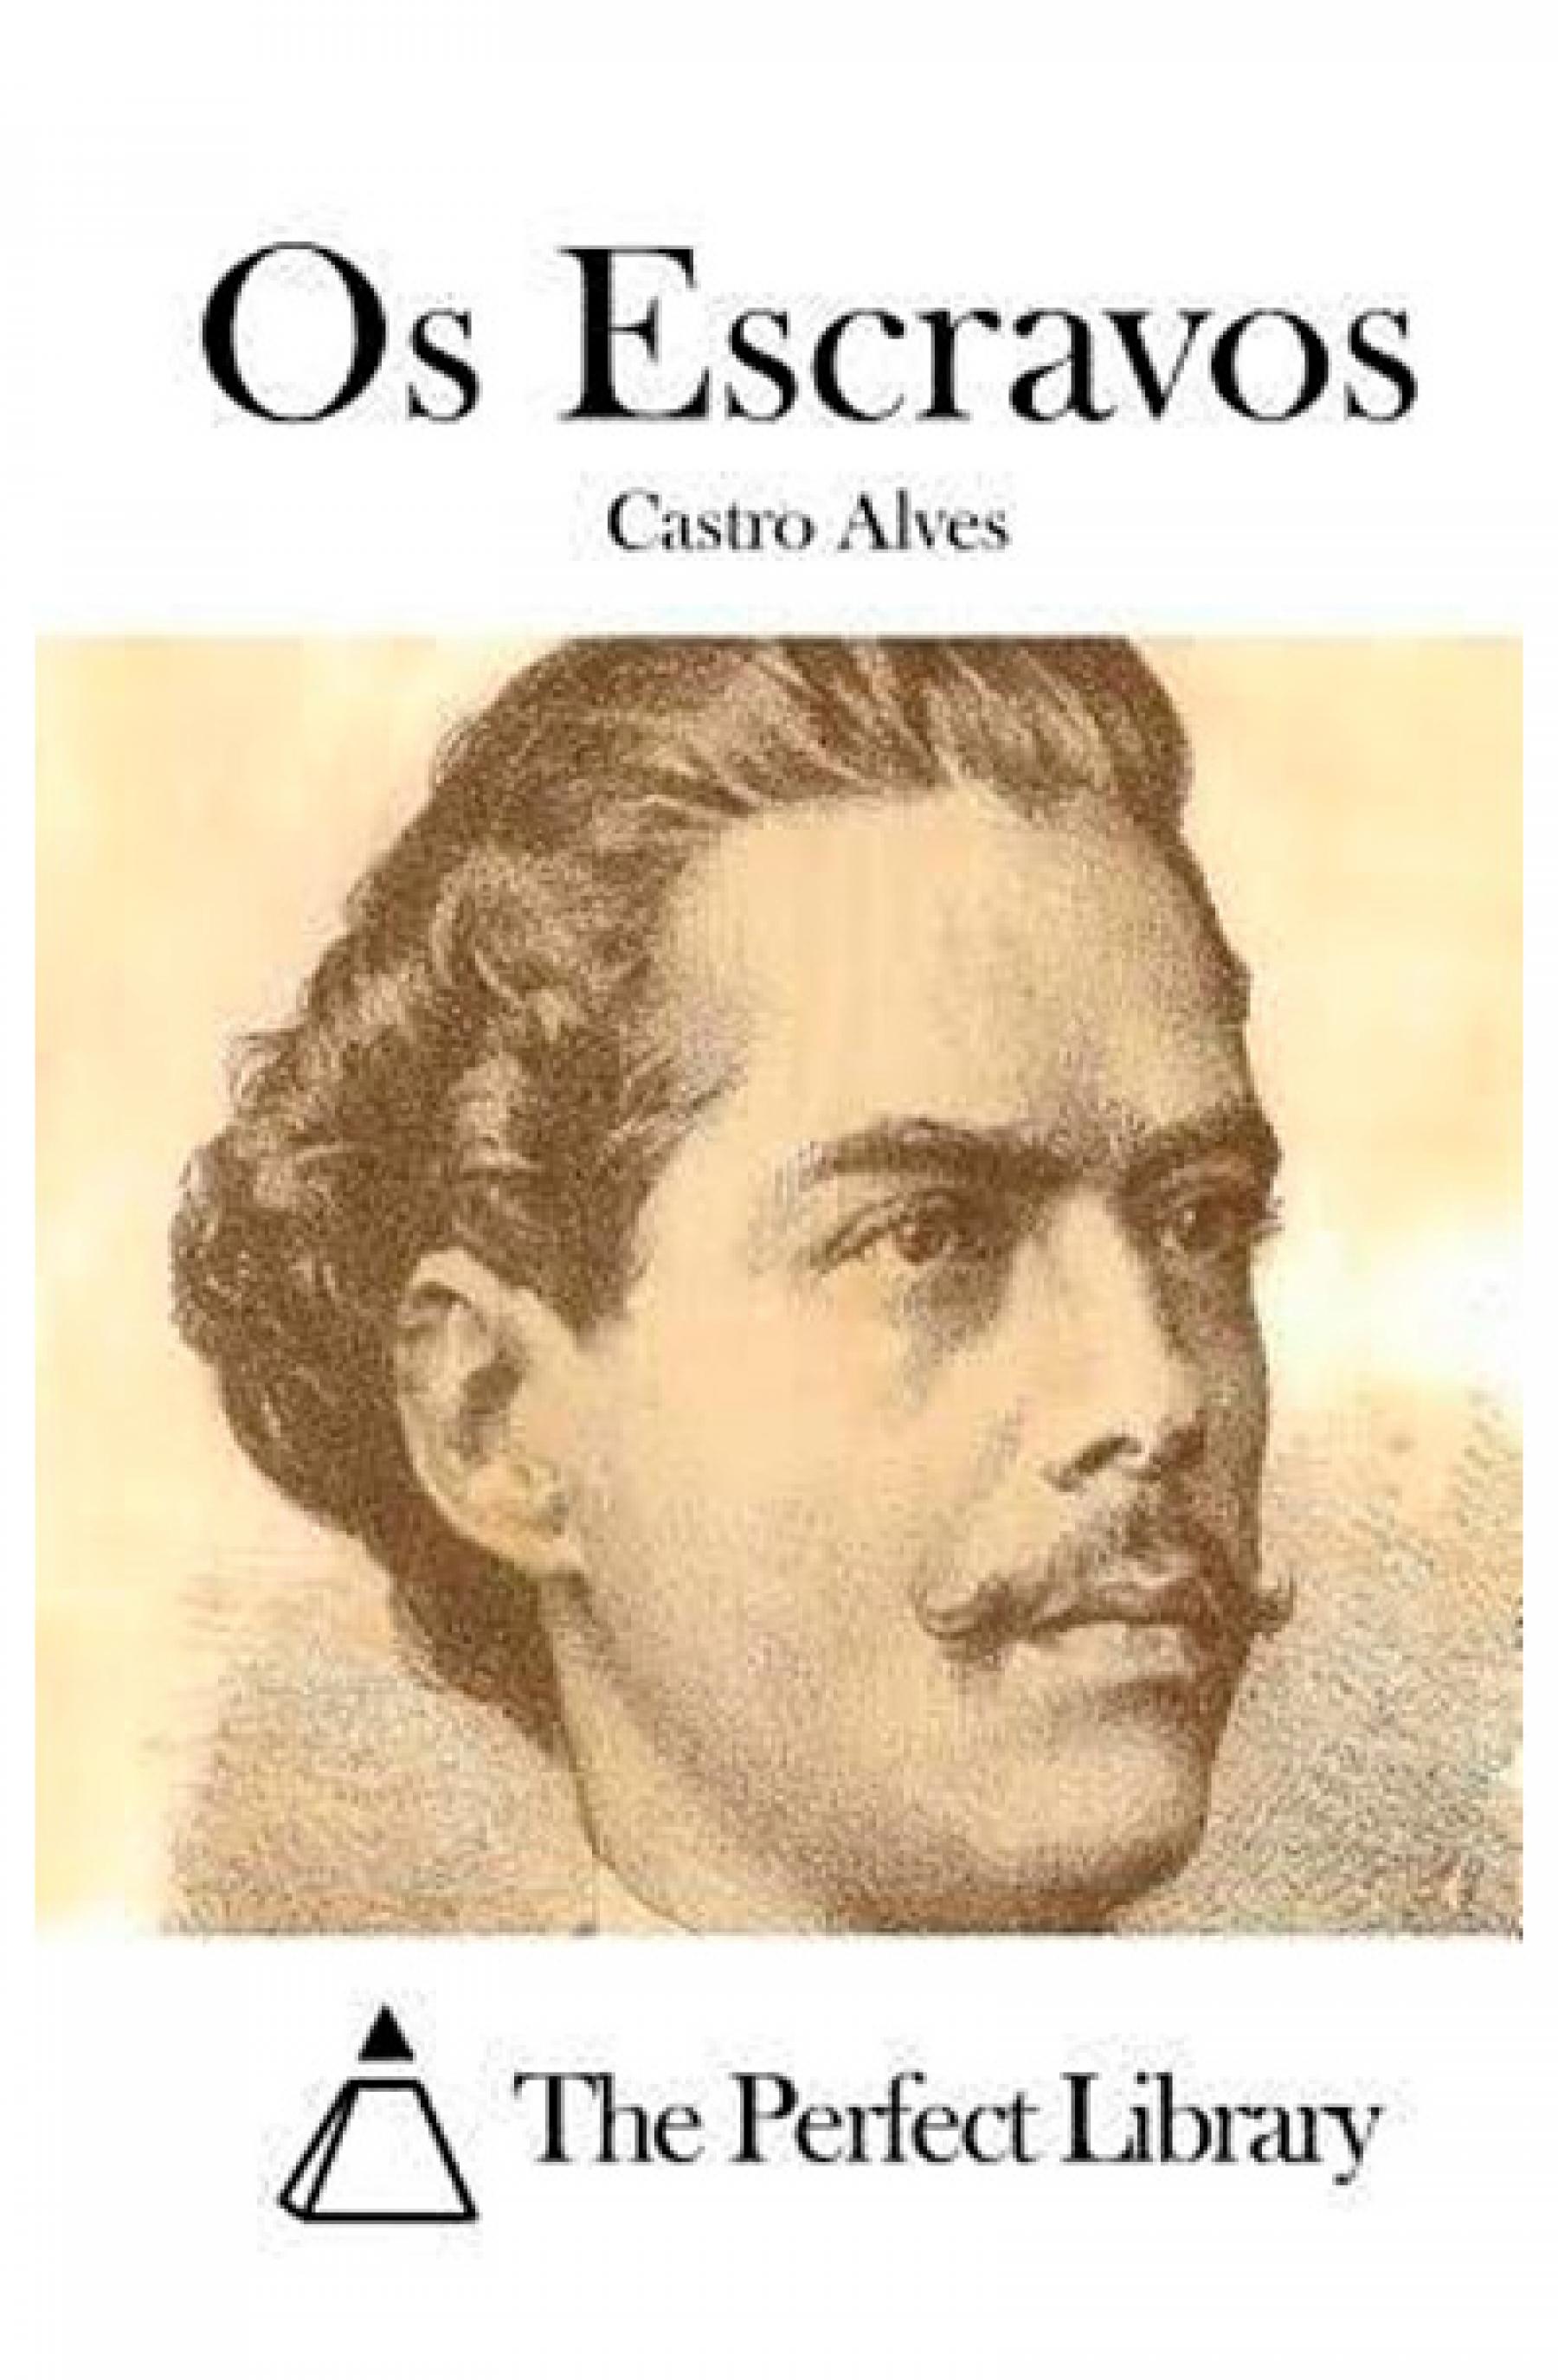 Castro Alves